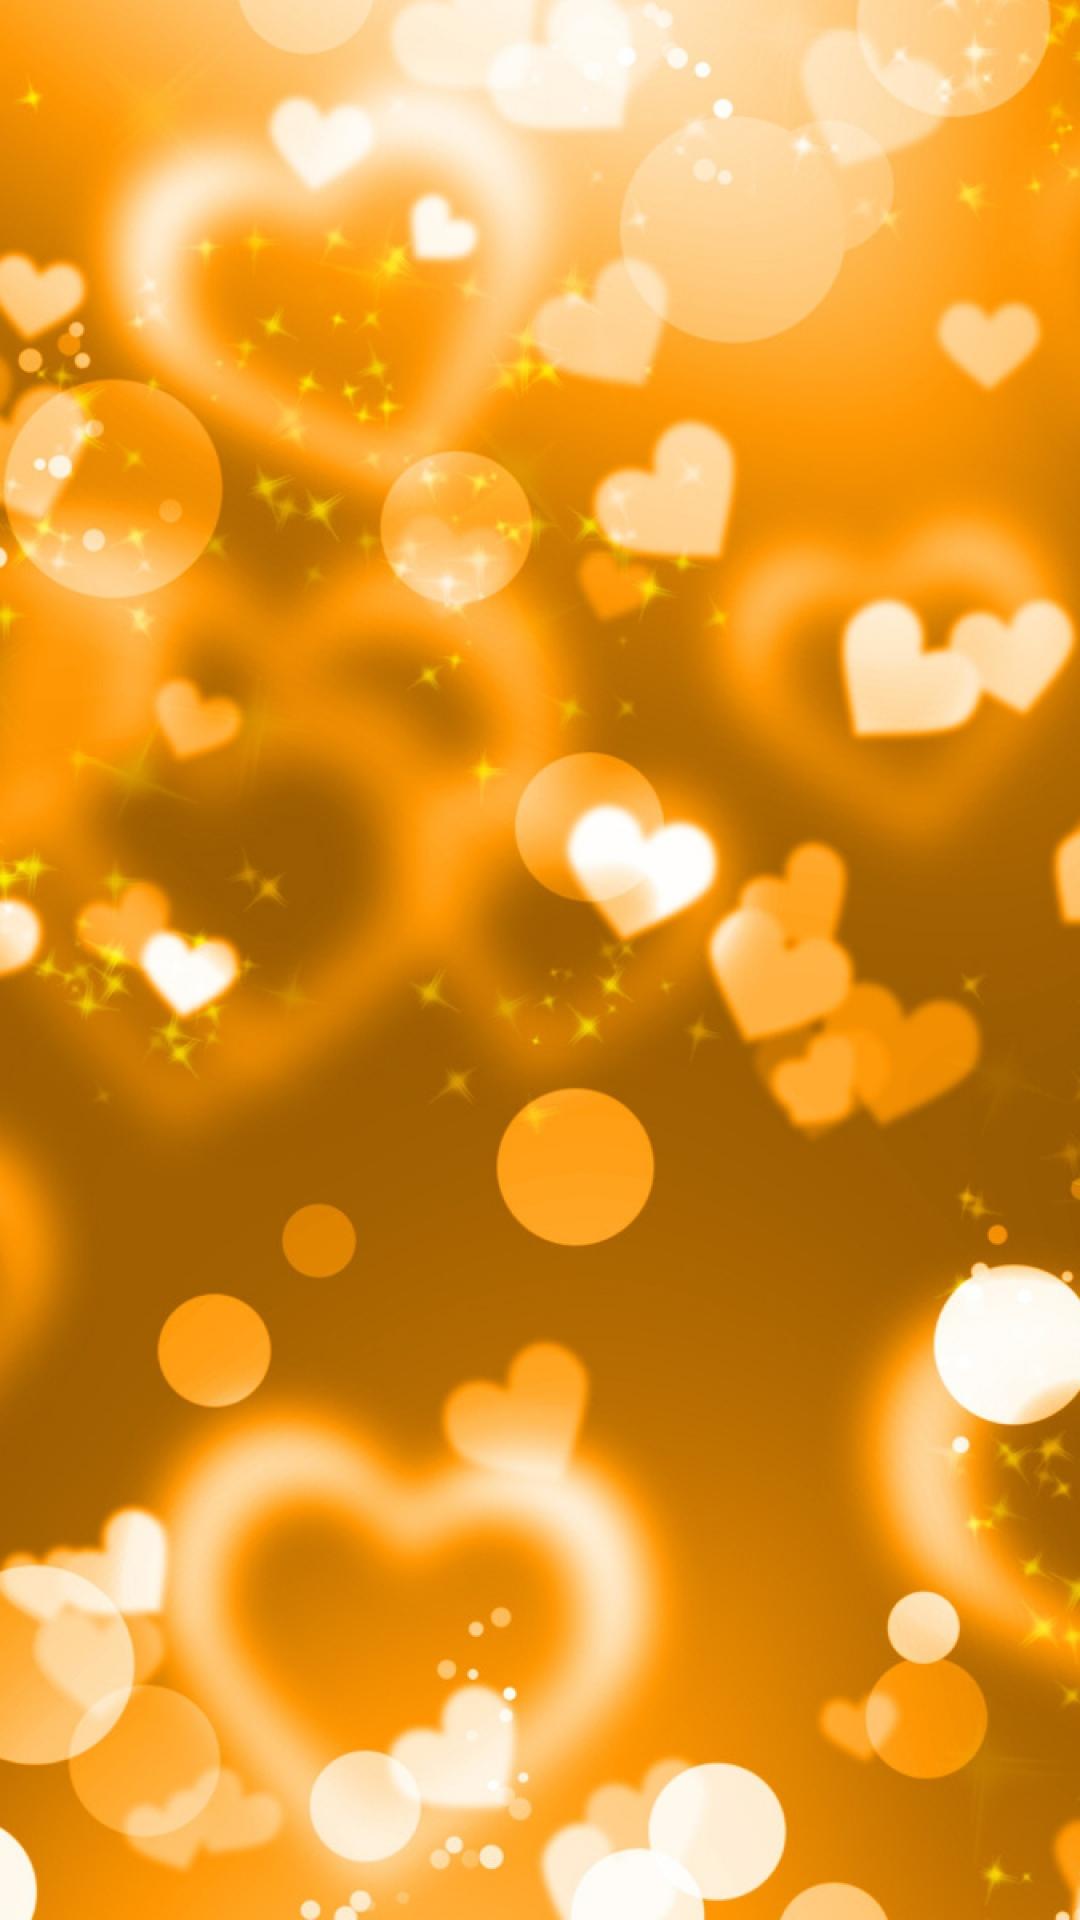 Gold heart. Girly iPhone wallpaper